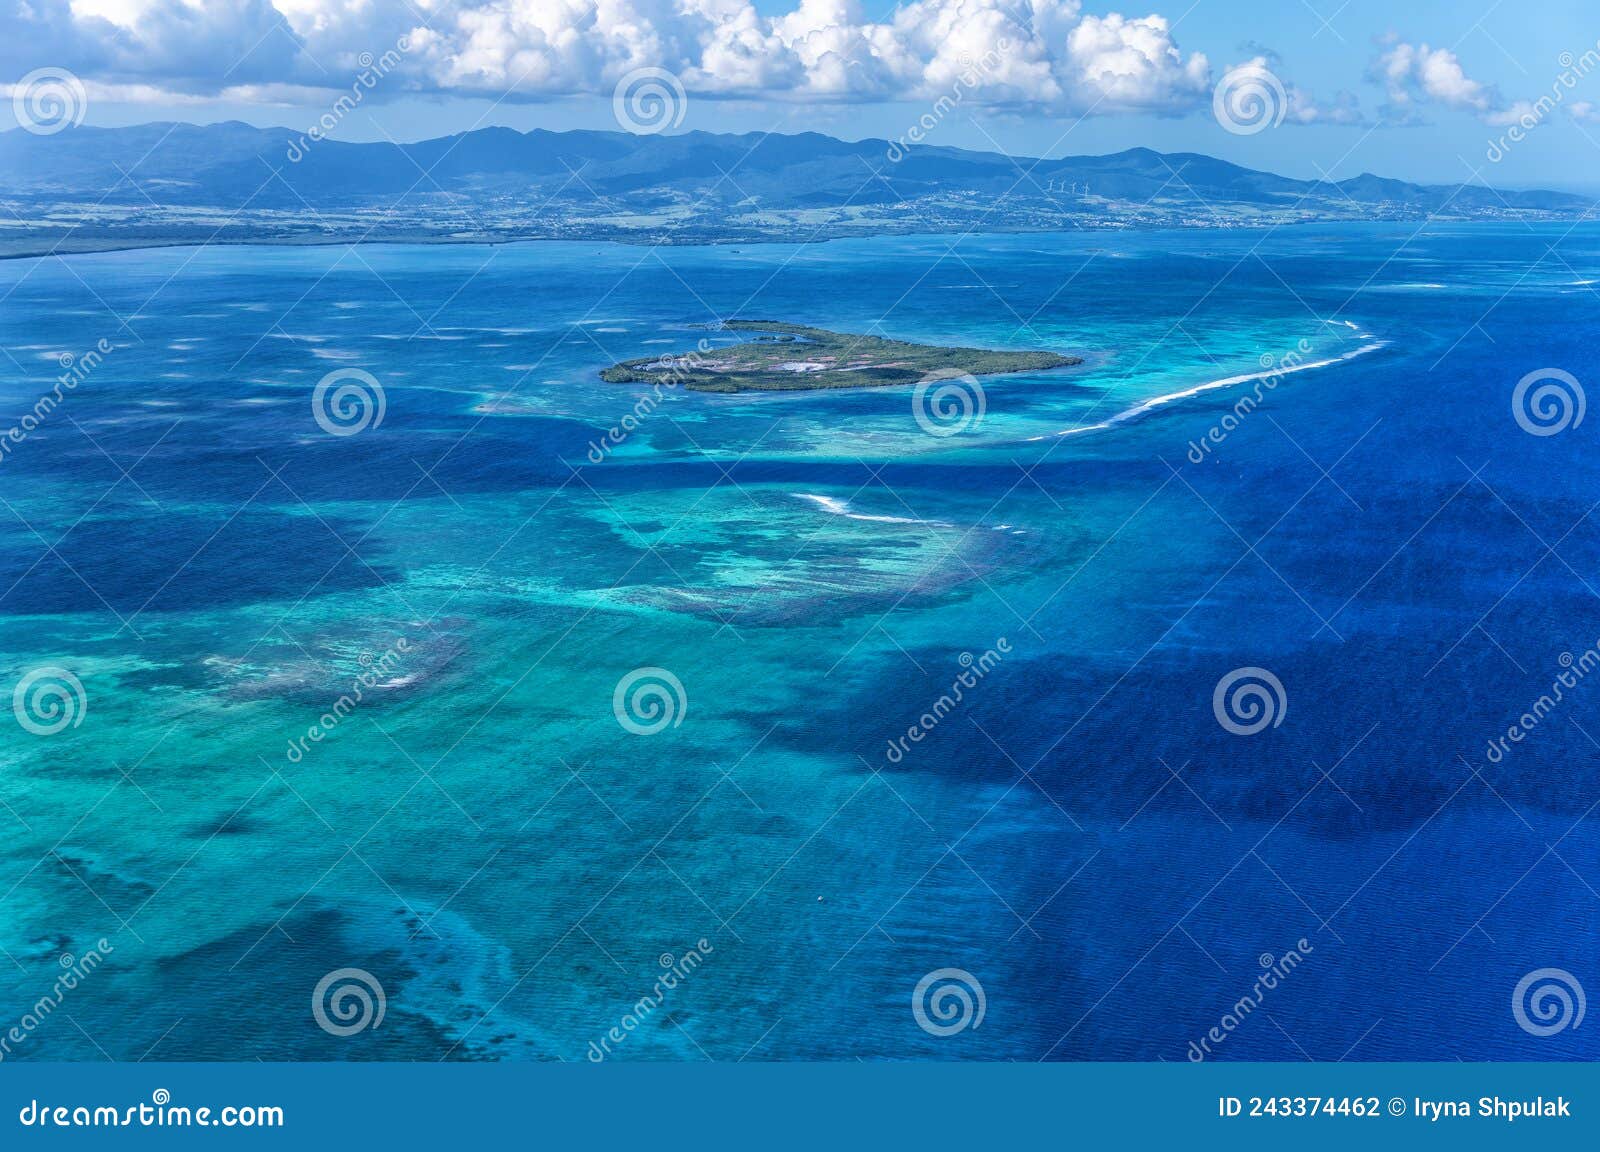 aerial view of ilet a fajou, grand cul de sac marin, basse-terre, guadeloupe, lesser antilles, caribbean